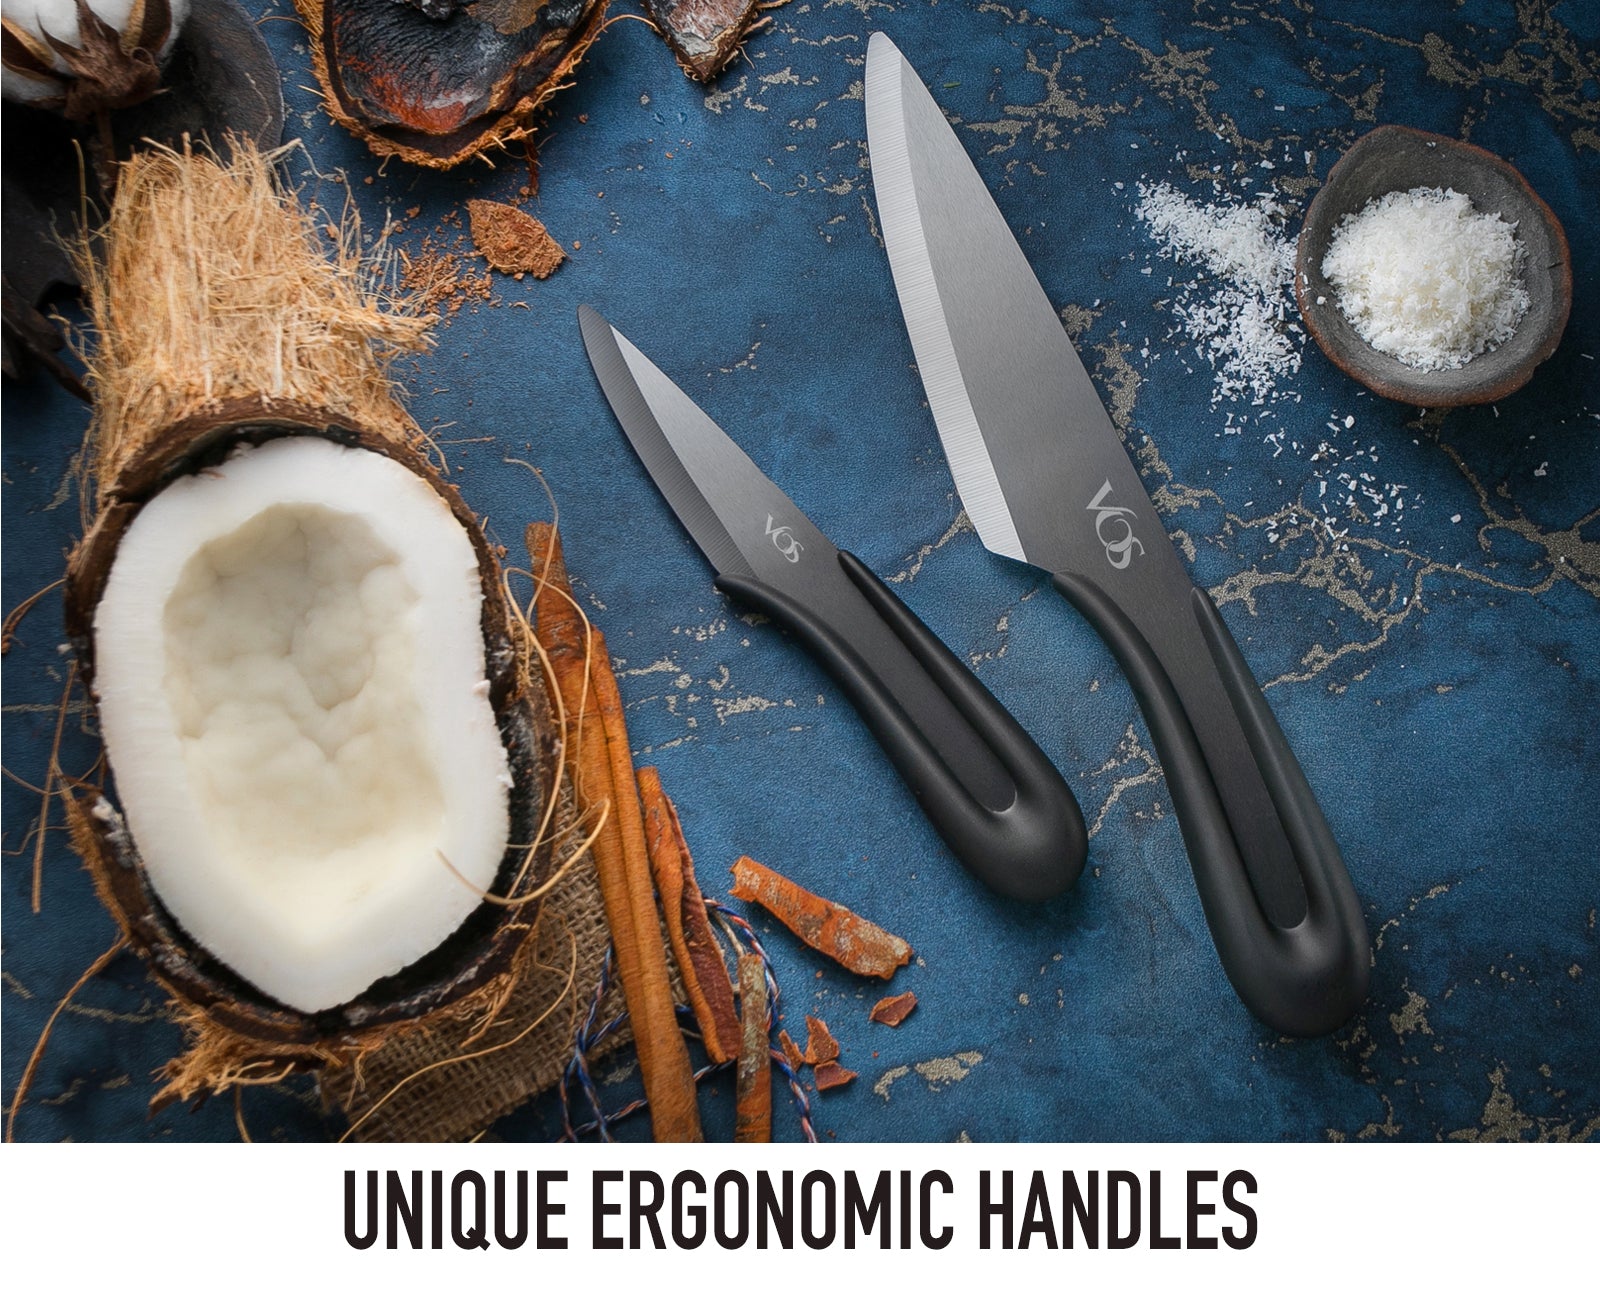 4 Inches Ceramic Paring Knife – Vosknife